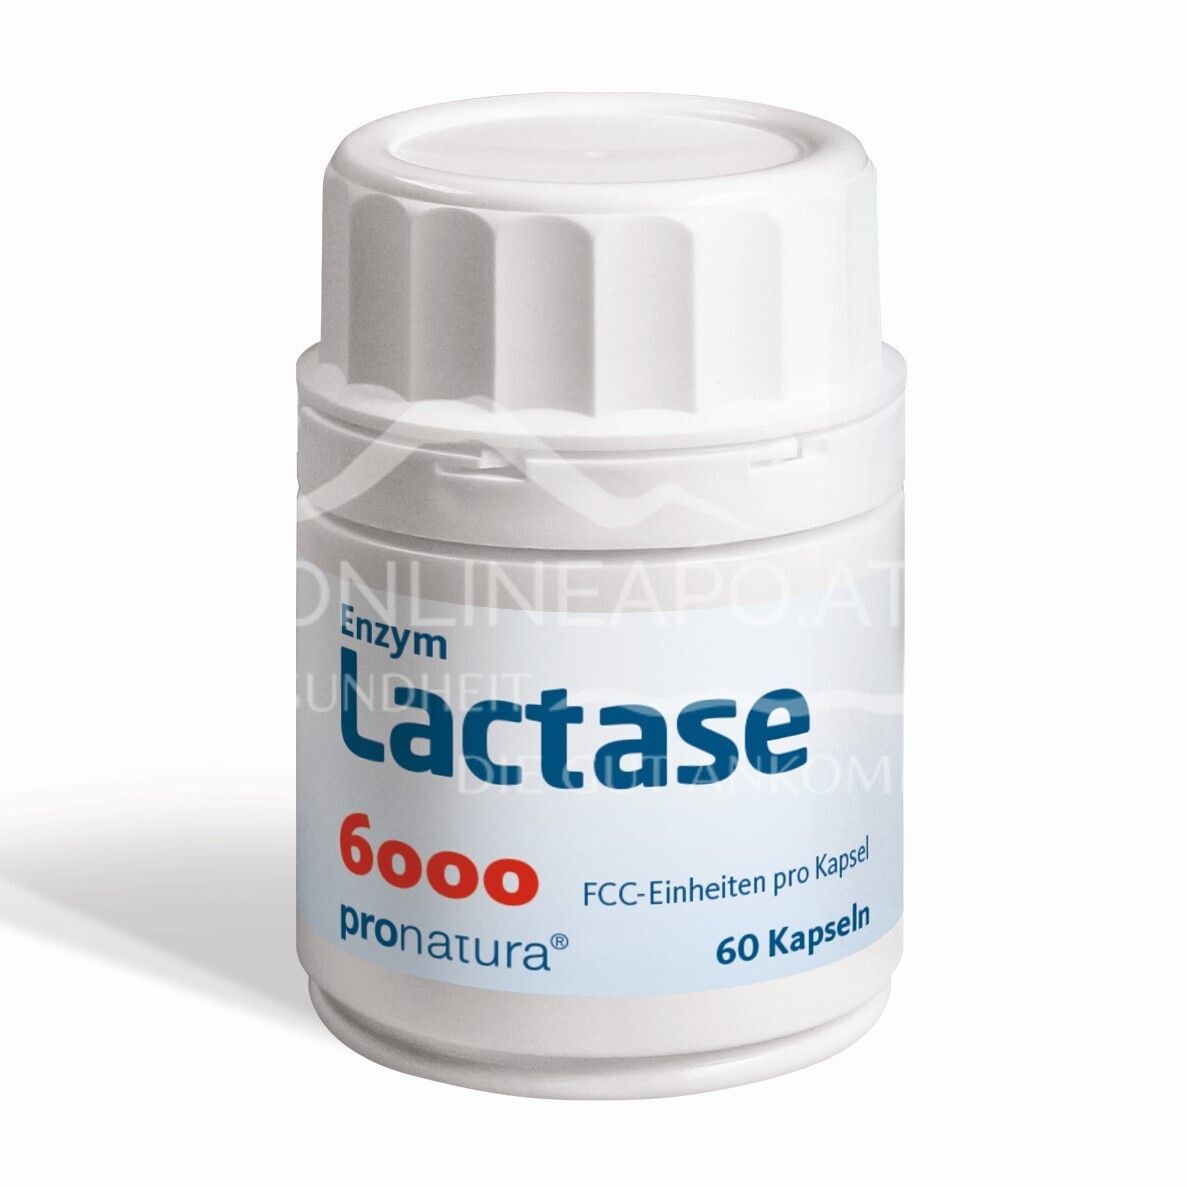 pronatura® Enzym Lactase 6000 FCC Kapseln